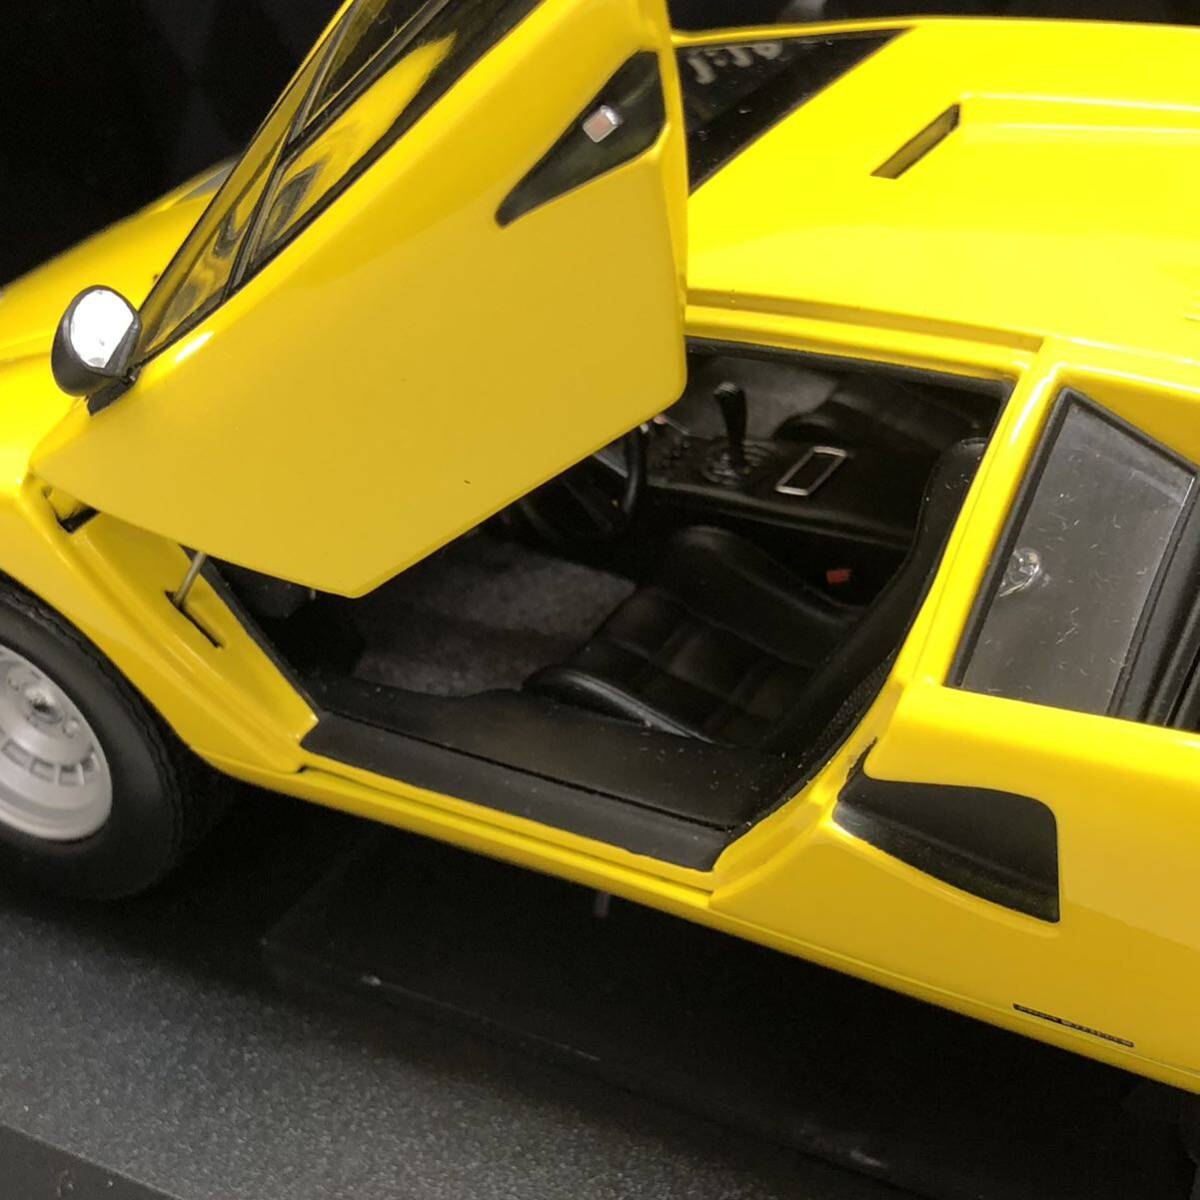 KYOSHO 1/18 литье под давлением машина GORGEOUS COLLECTION Lamborghini счетчик kLP400 желтый б/у текущее состояние товар Kyosho 